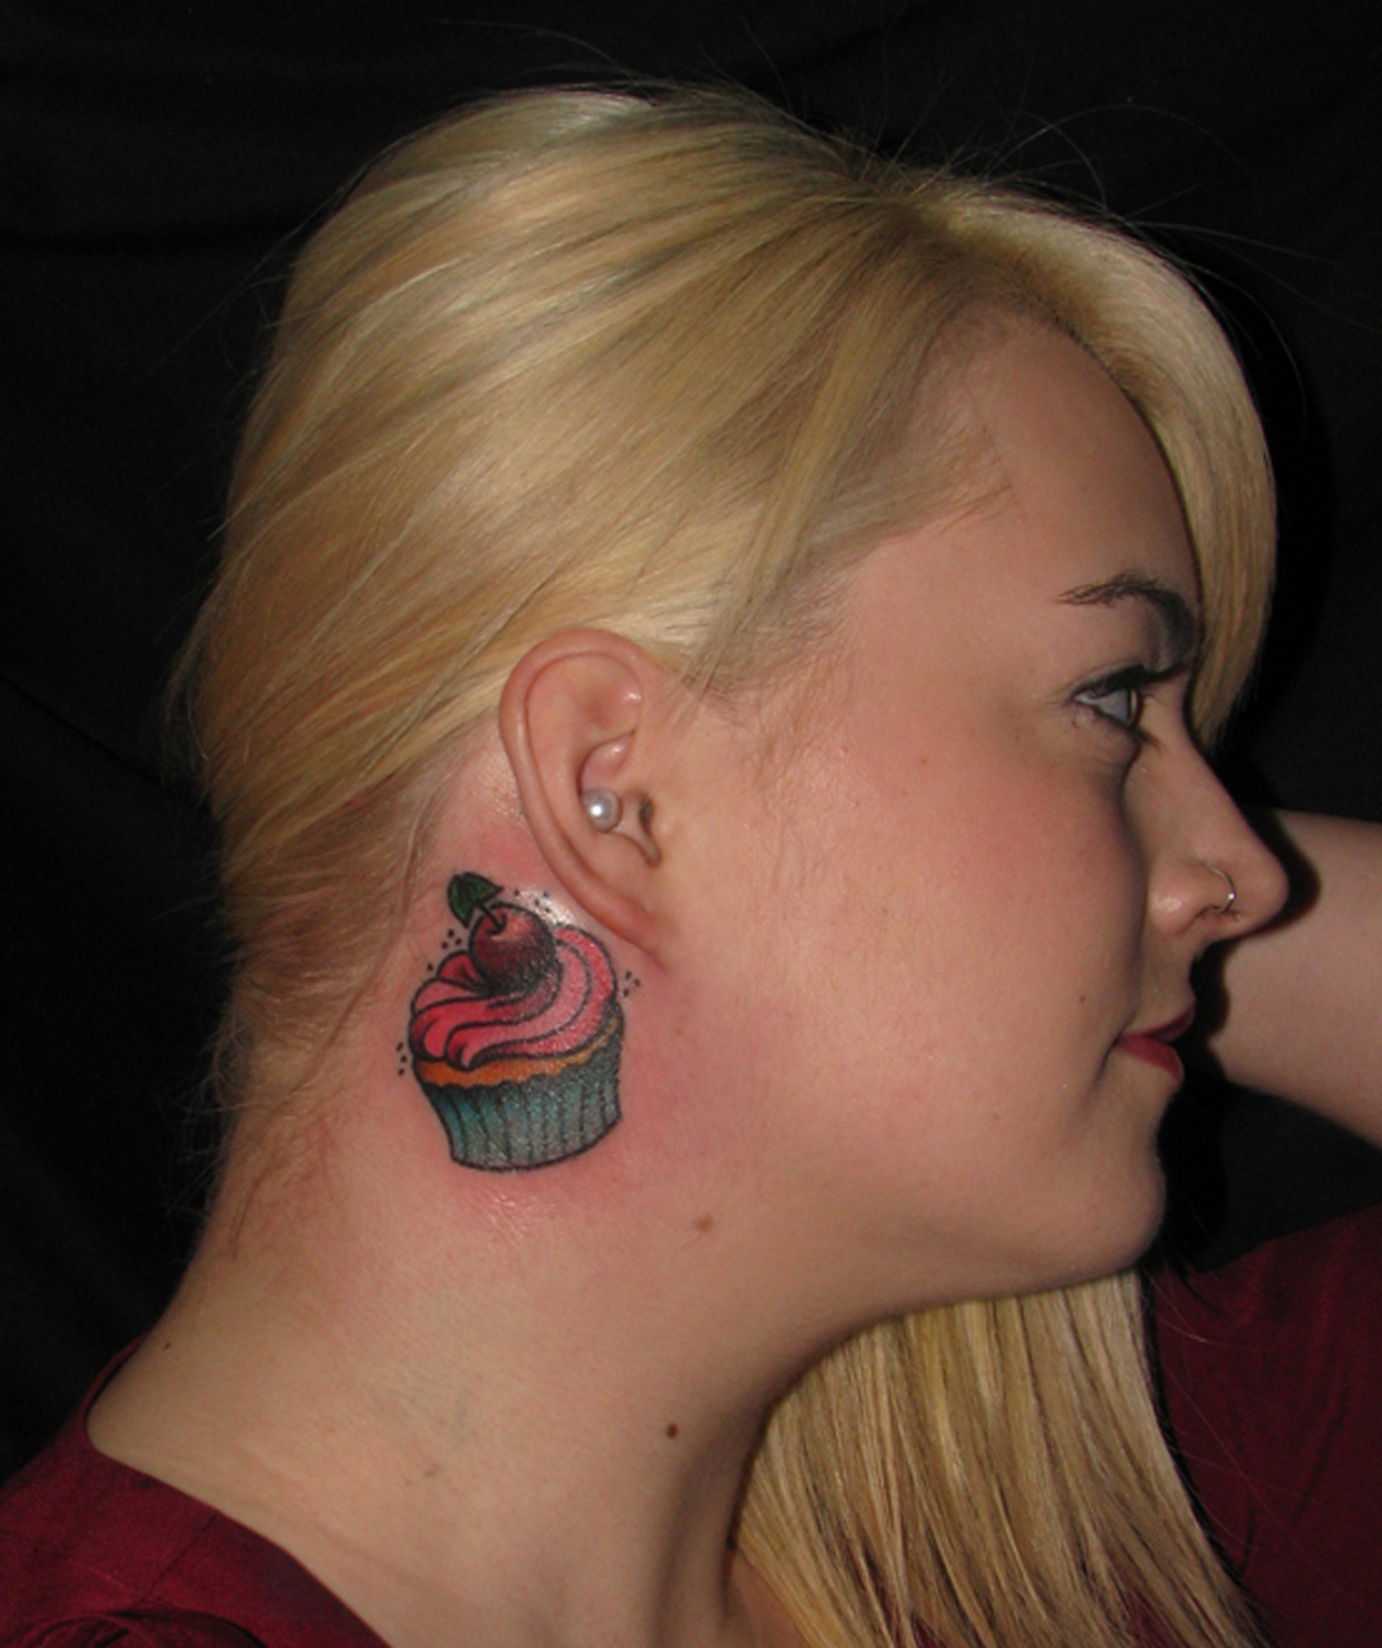 tattoos Tags behind ear